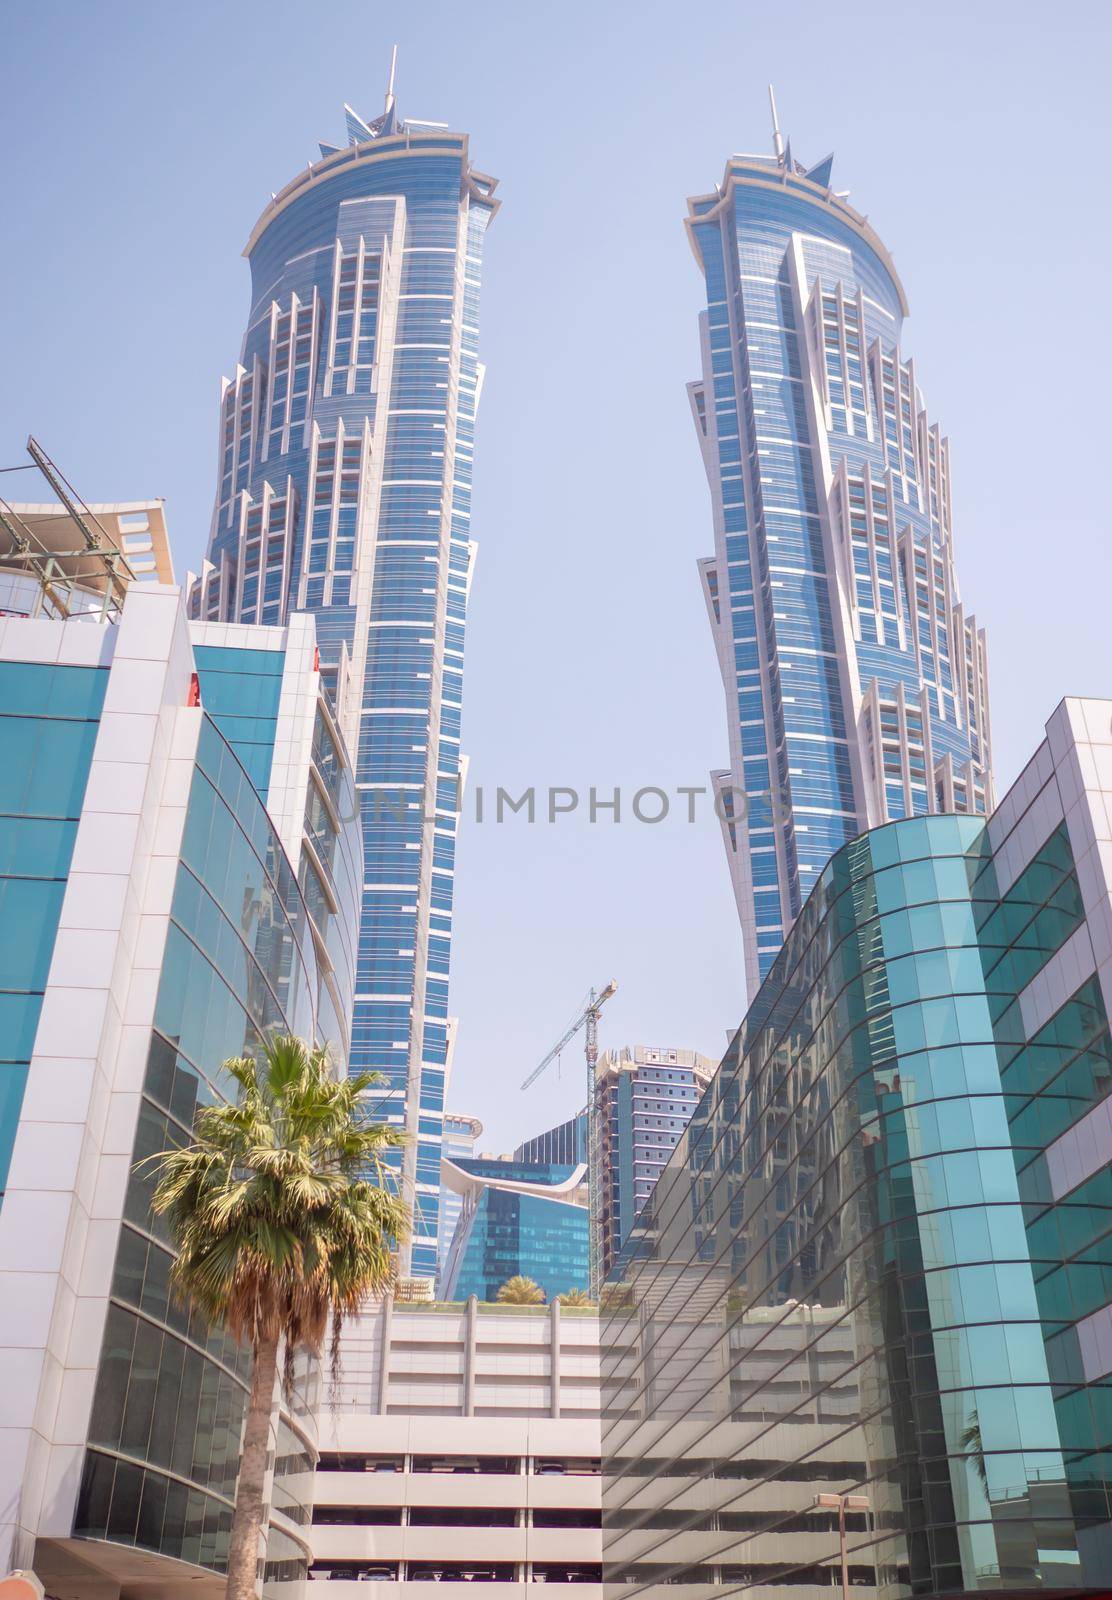 Modern buildings in Dubai on a clear day.